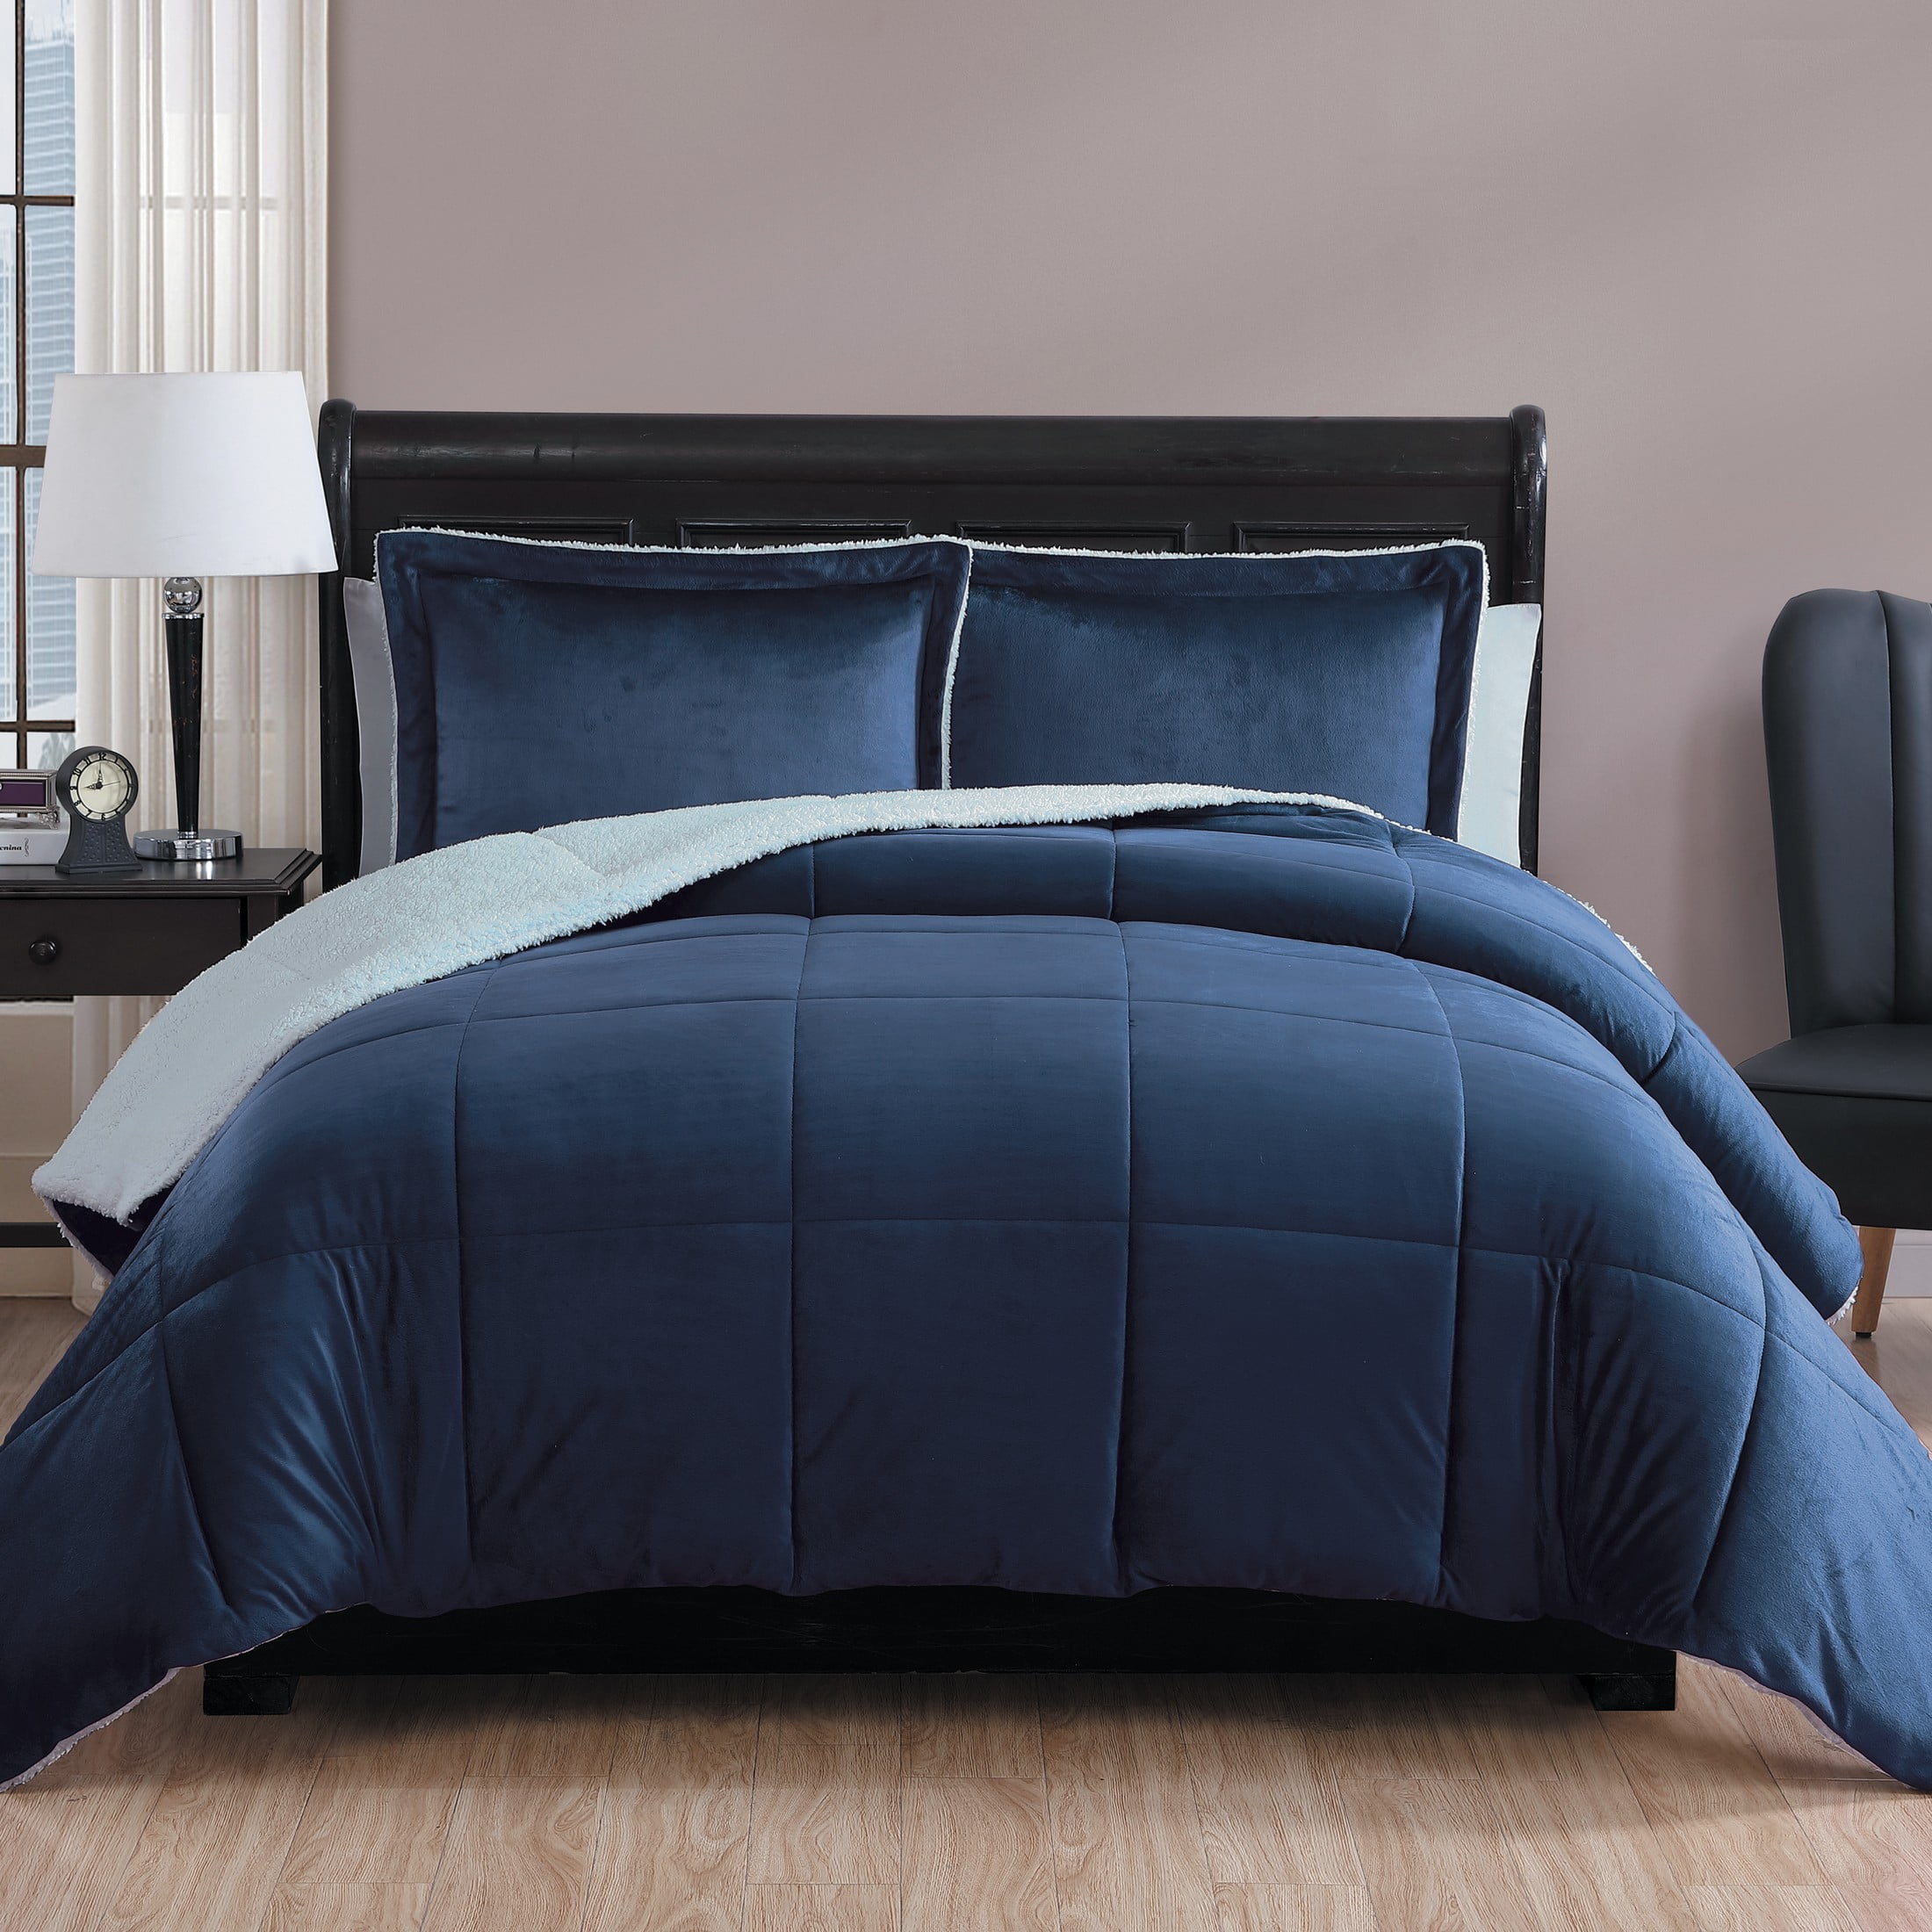 VCNY Home Micromink coforter Set Navy King